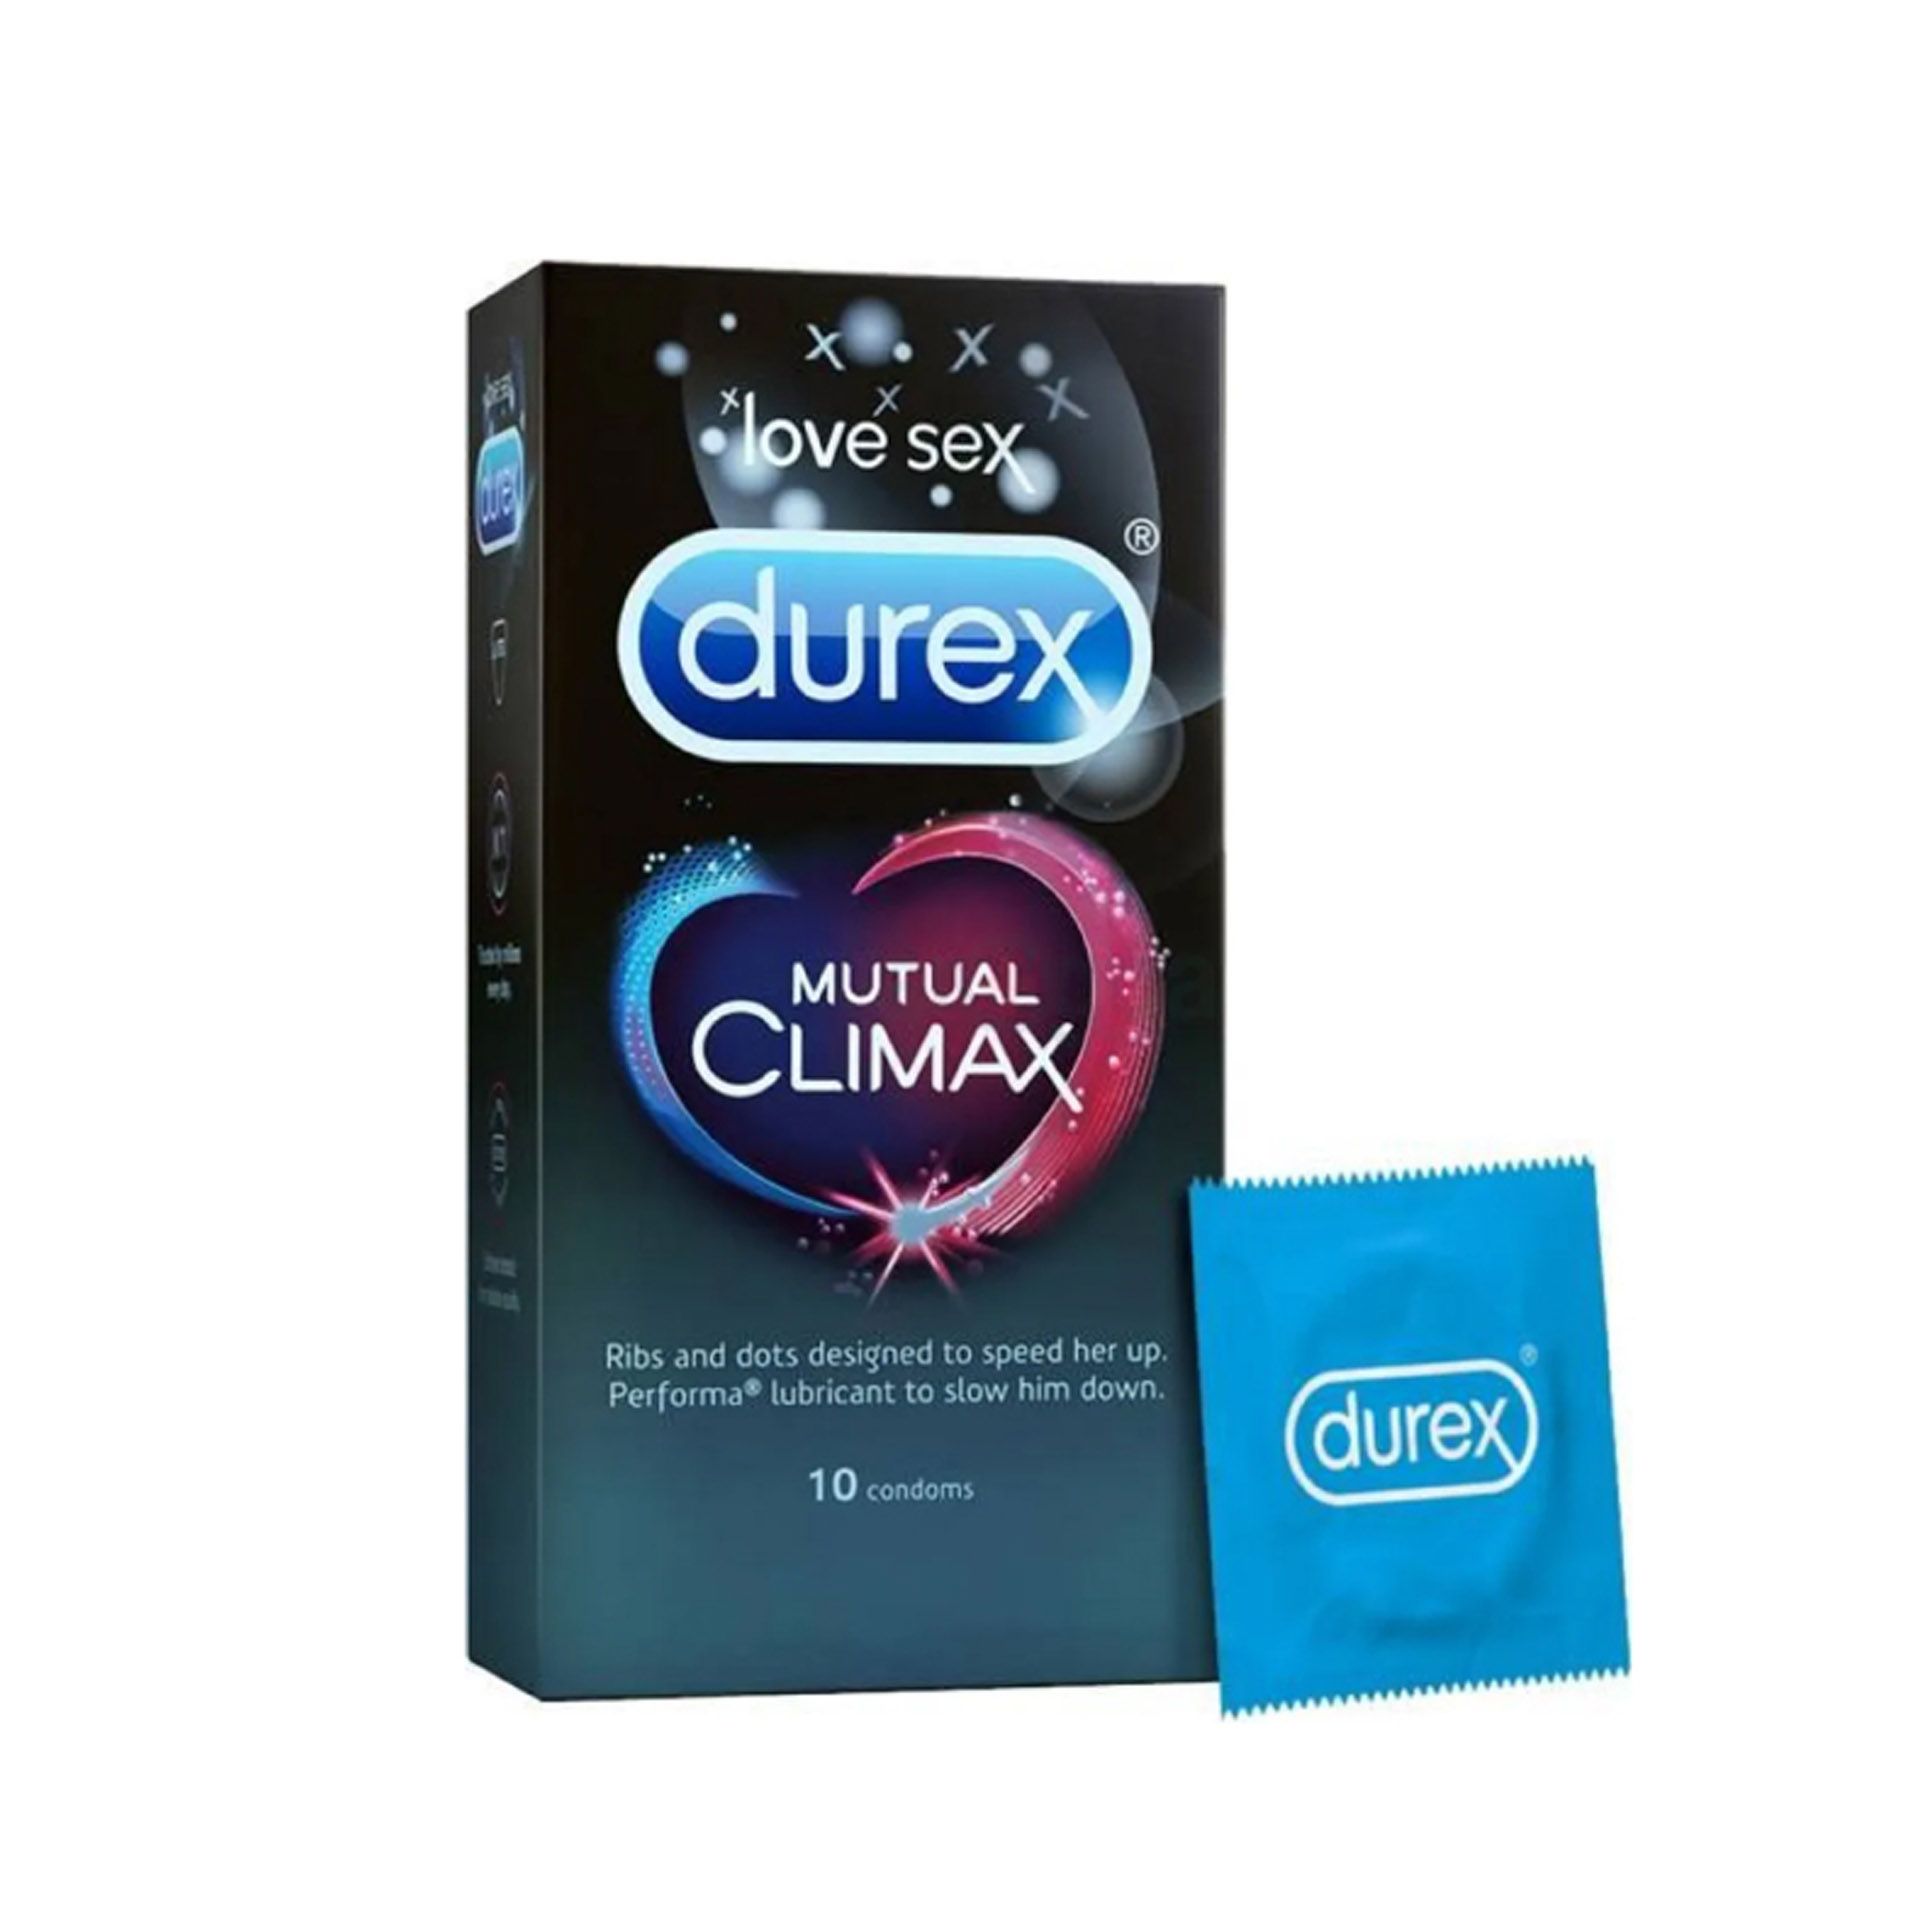 Durex Mutual Climax Condoms 10's Pack  